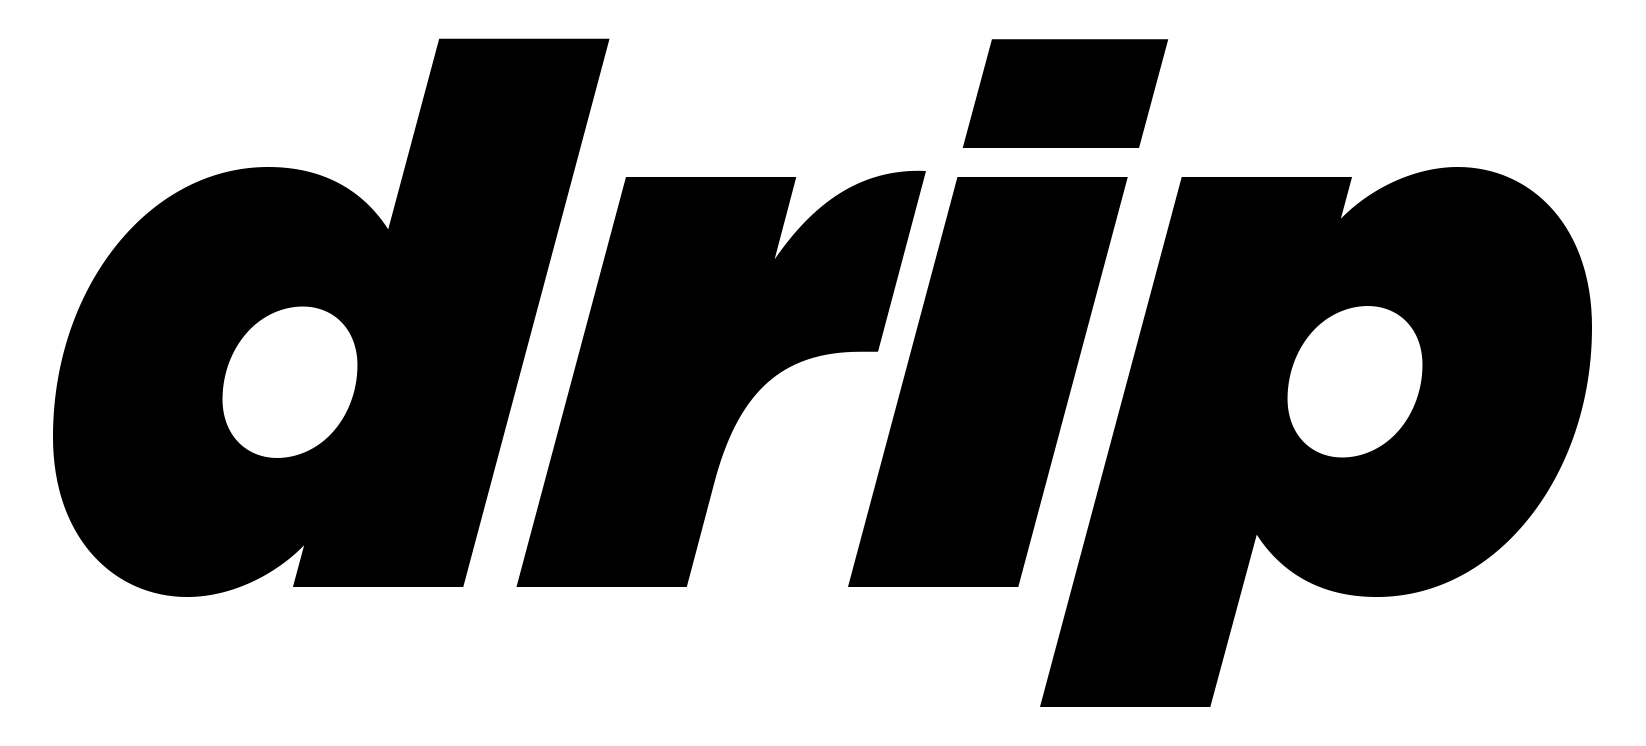 drip logo 1 black.png